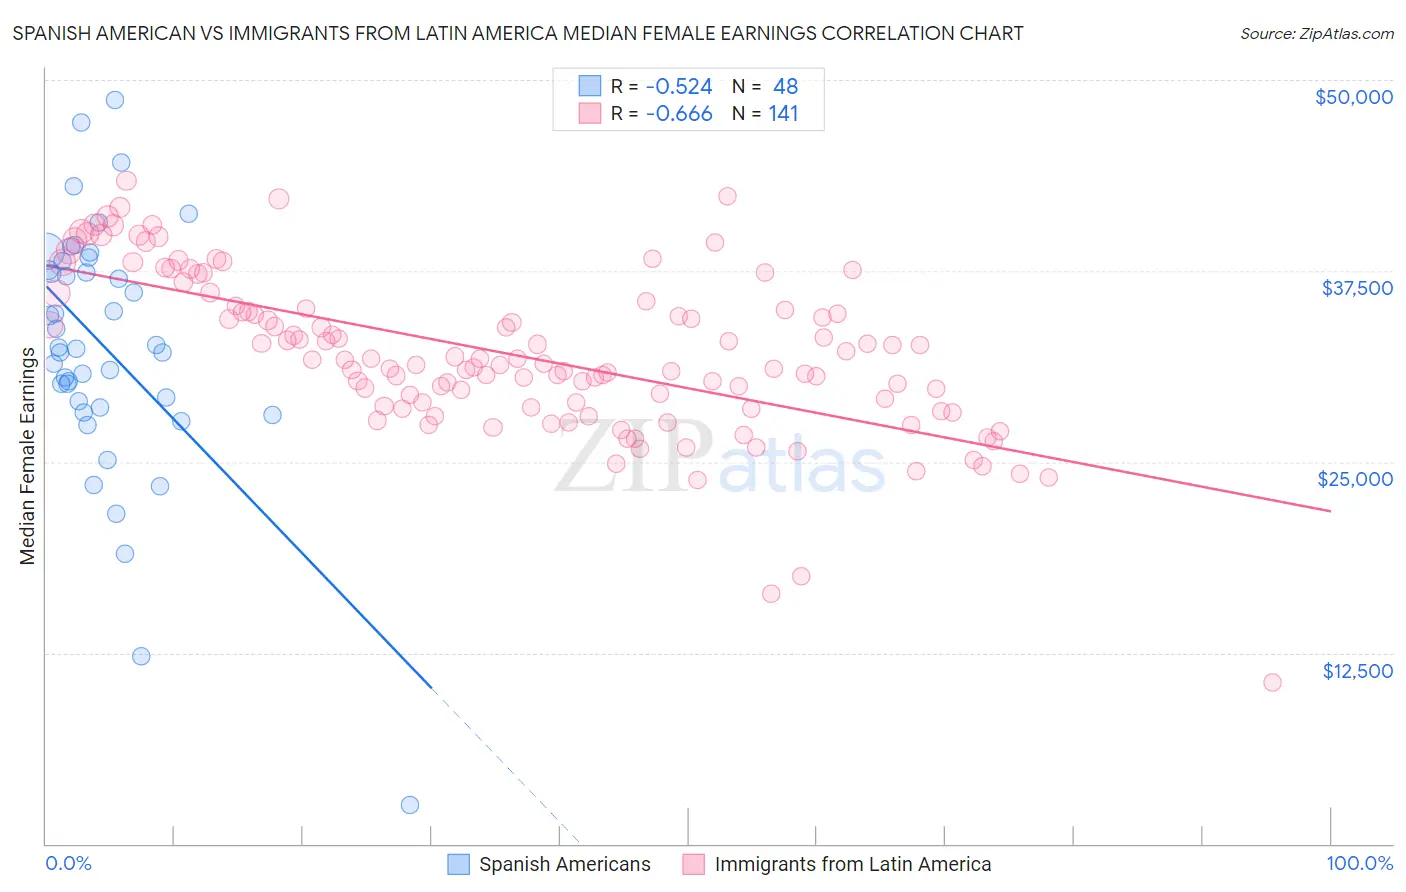 Spanish American vs Immigrants from Latin America Median Female Earnings